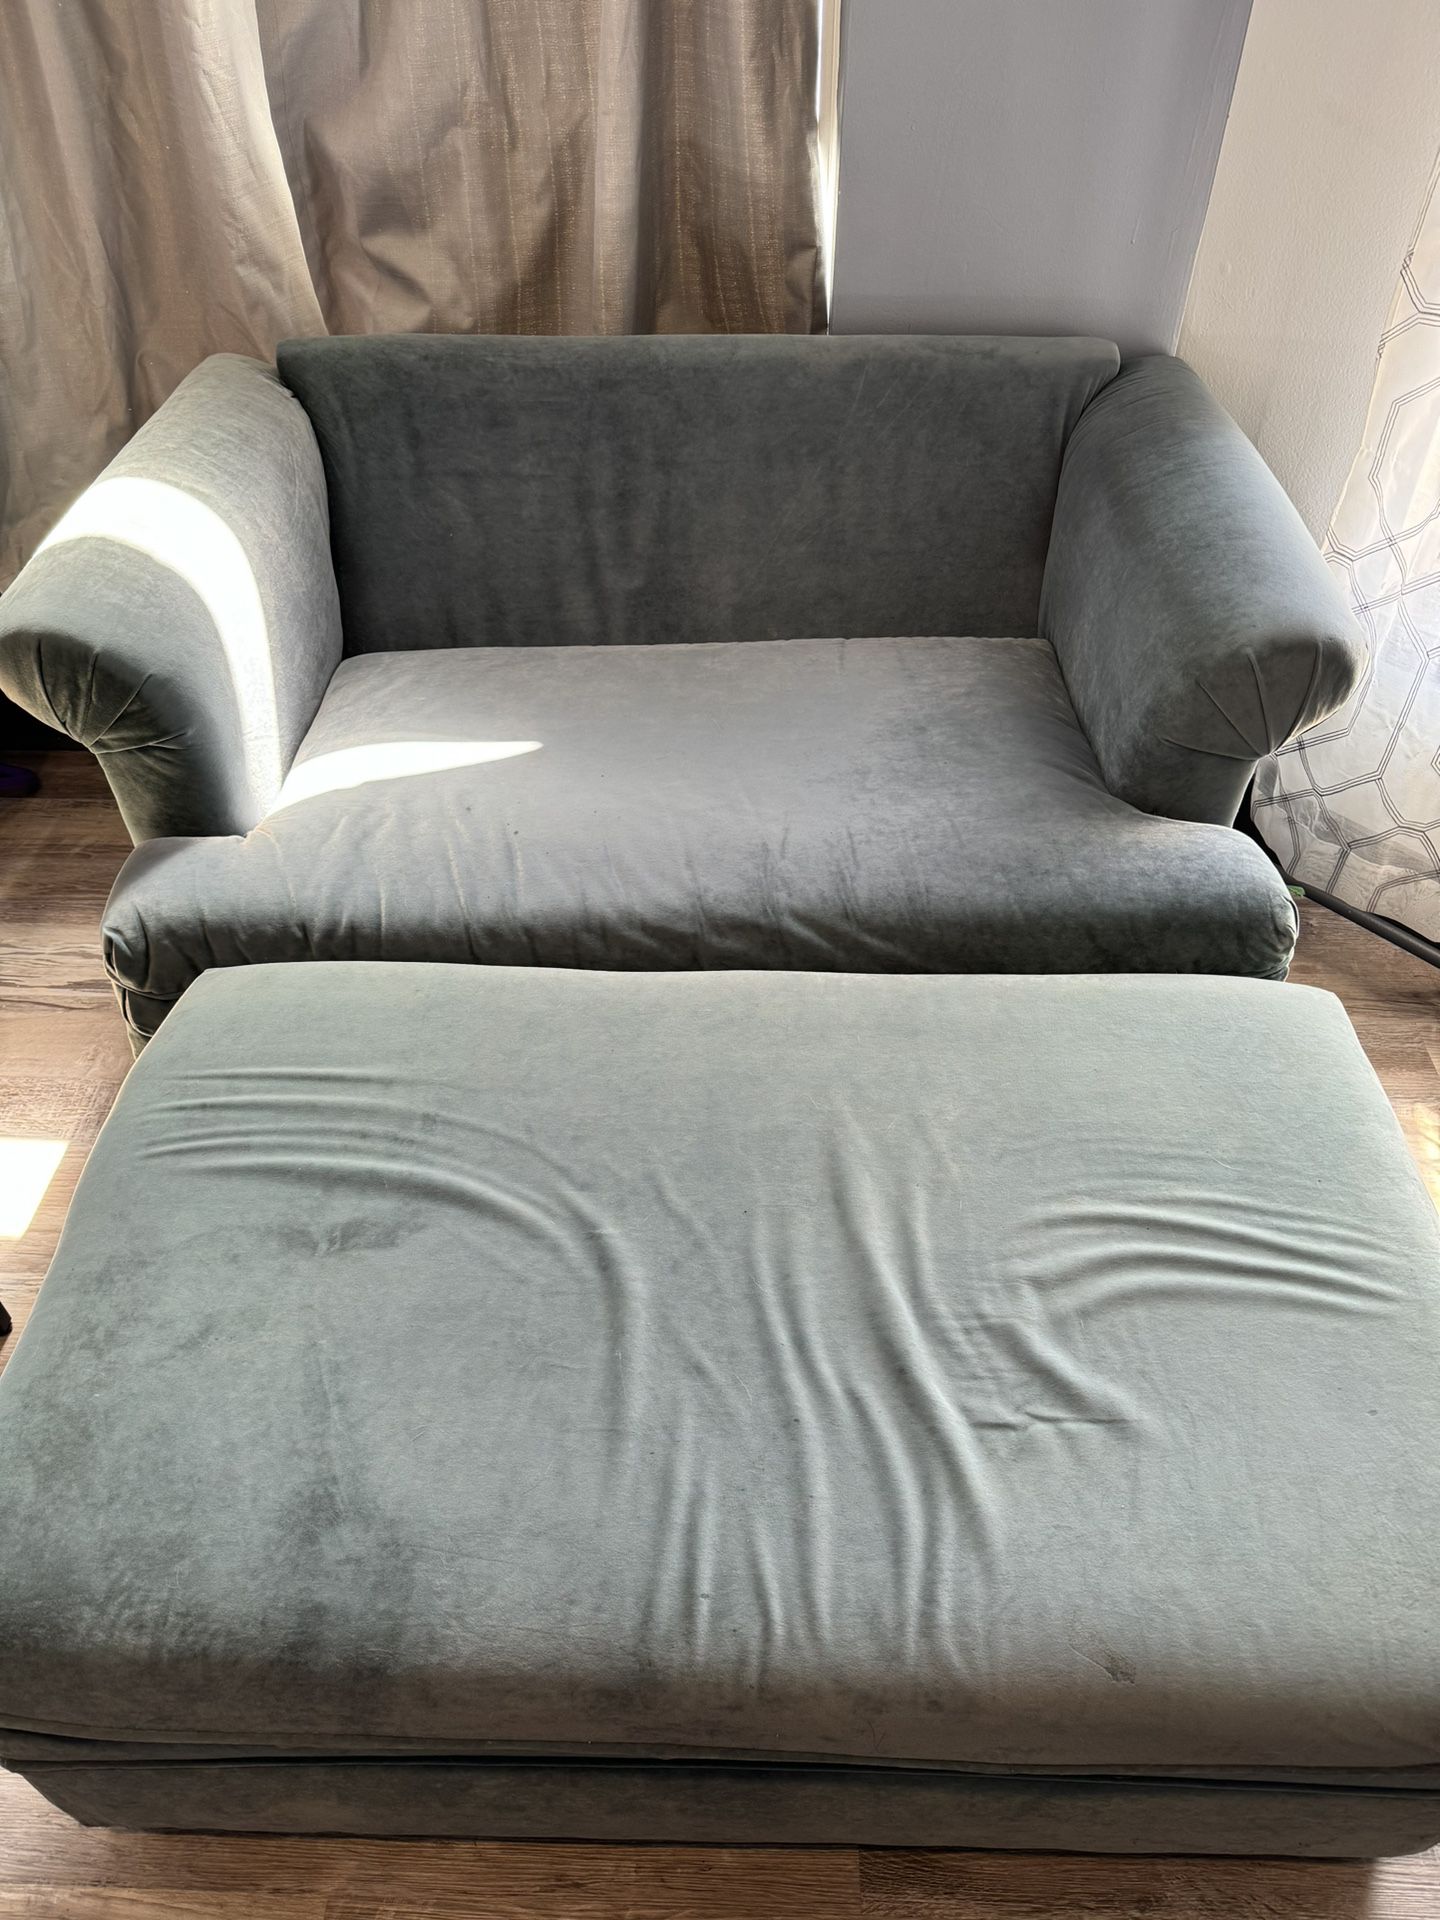 Sofa twin bed with Ottman 